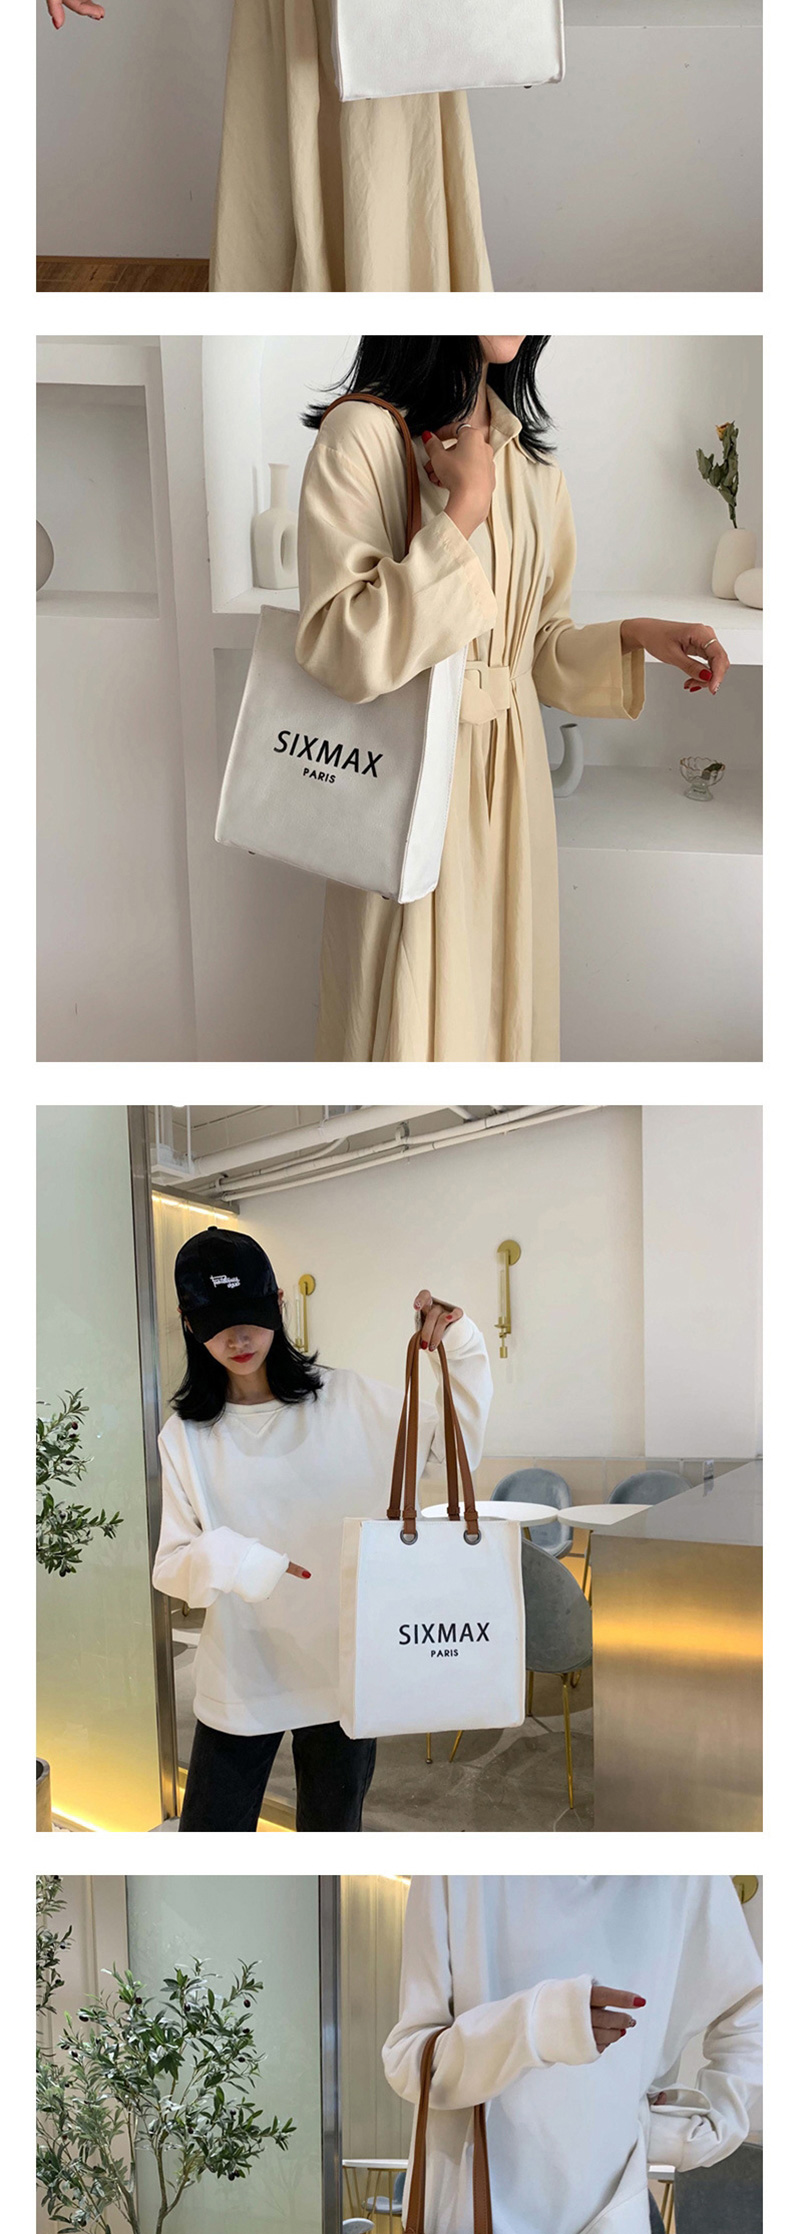 Fashion White Canvas Shoulder Bag,Messenger bags